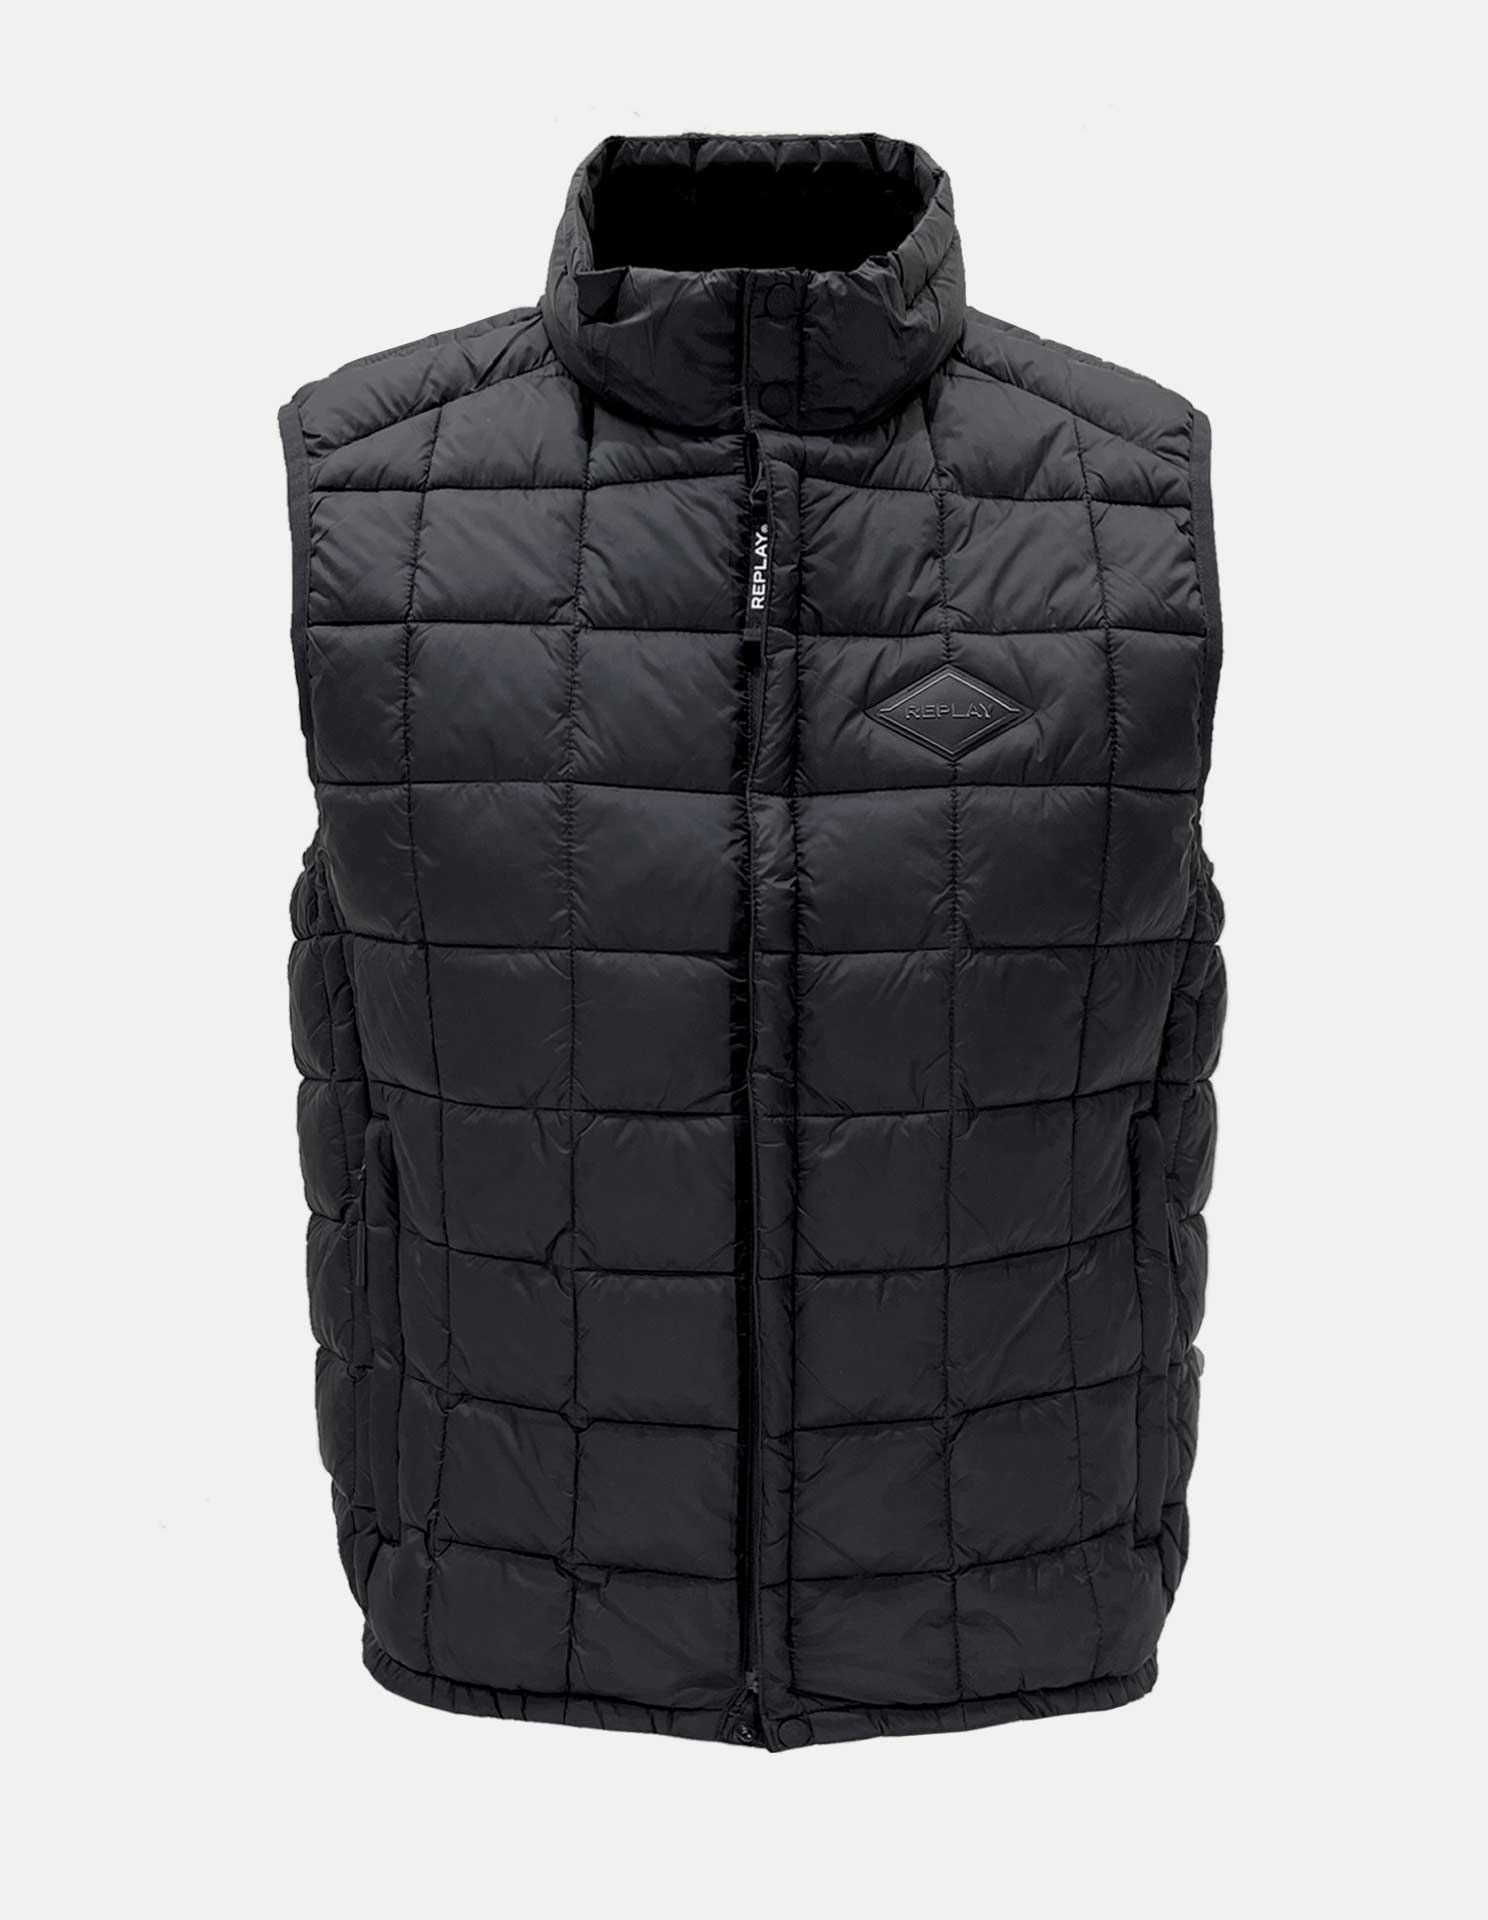 Replay Black Light Puffer Vest - George Harrison | Designer Menswear in ...